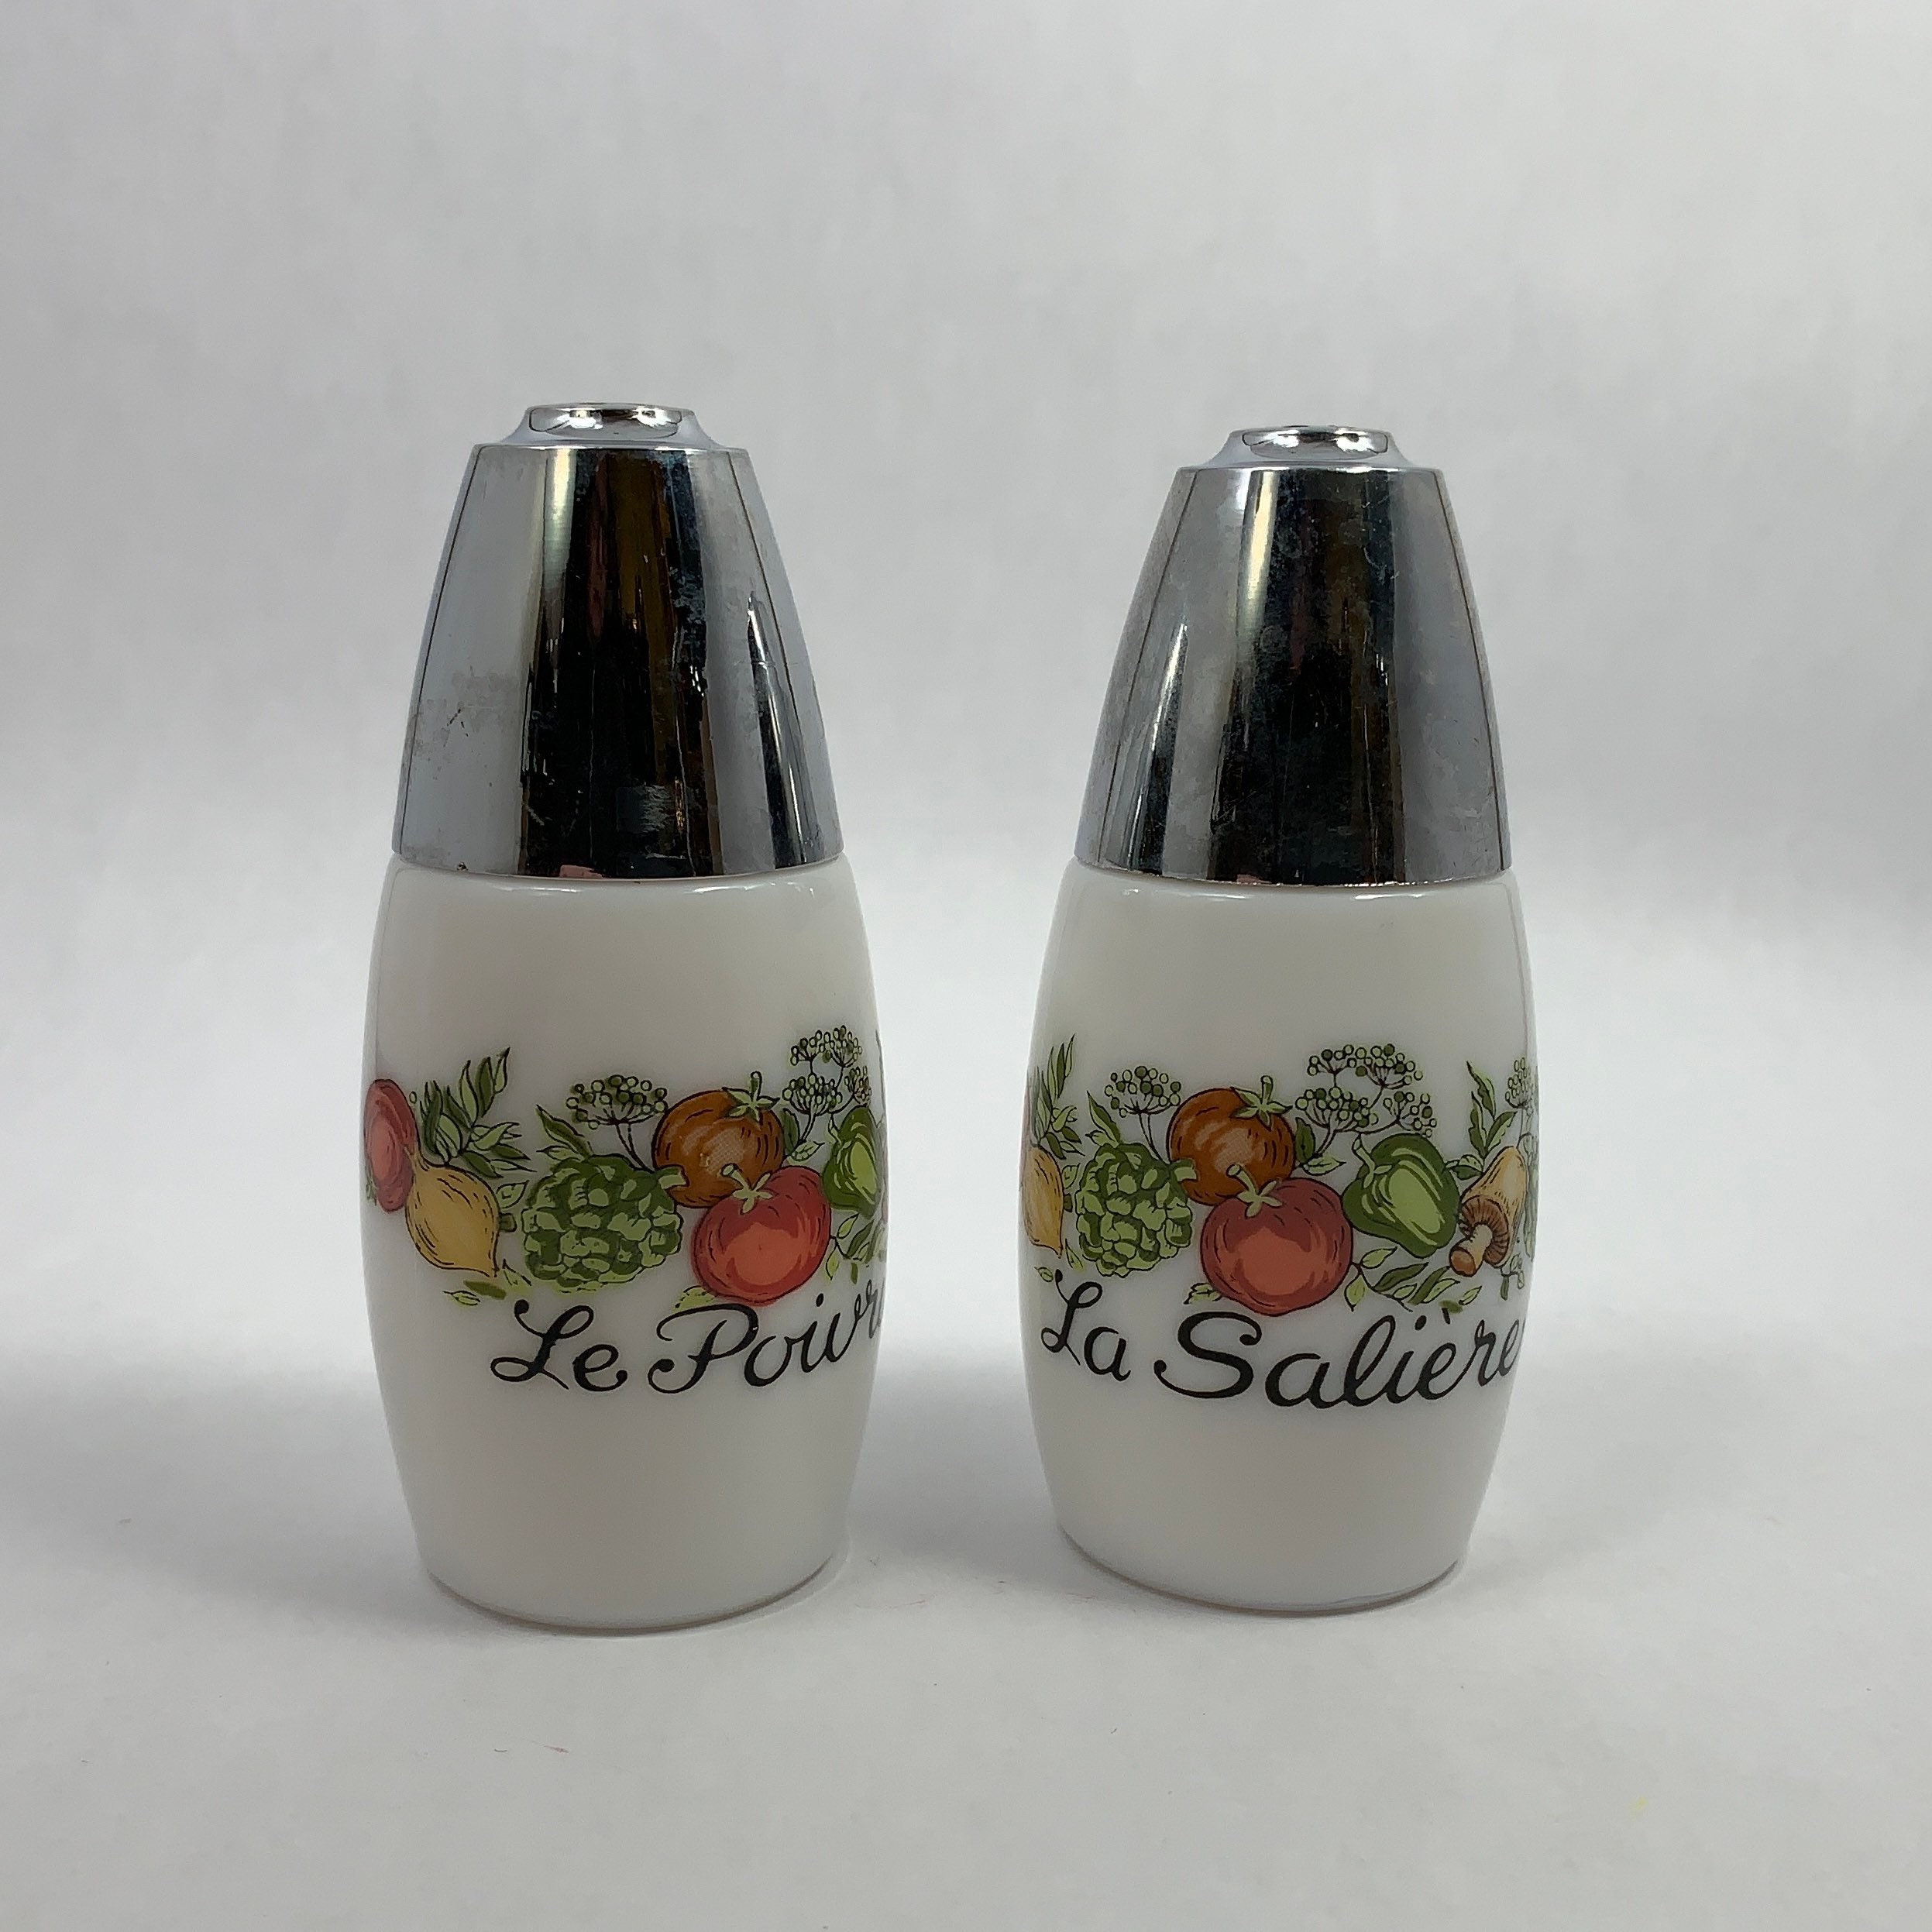 Gemco Salt & Pepper Shaker La Saliere Le Poivrier Milk Glass Spice of Life  #2203